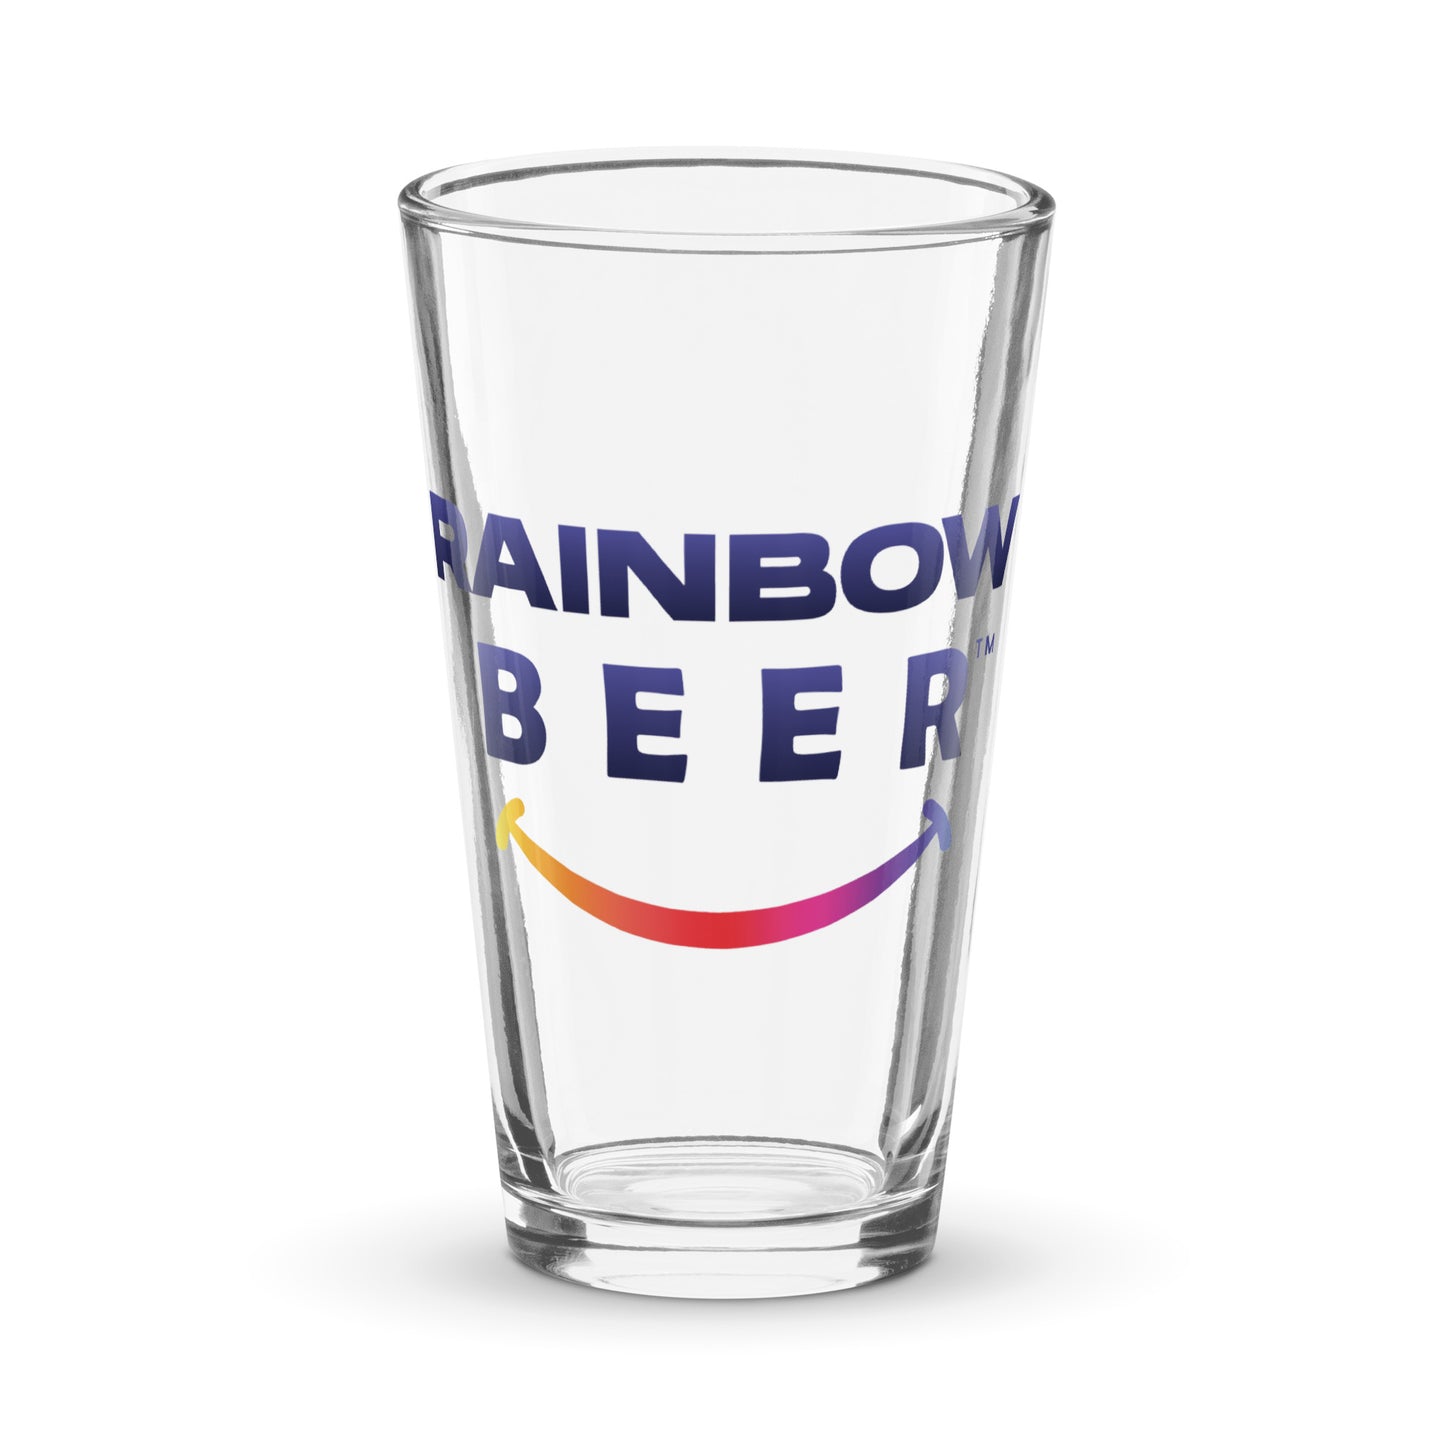 rainbow beer glass